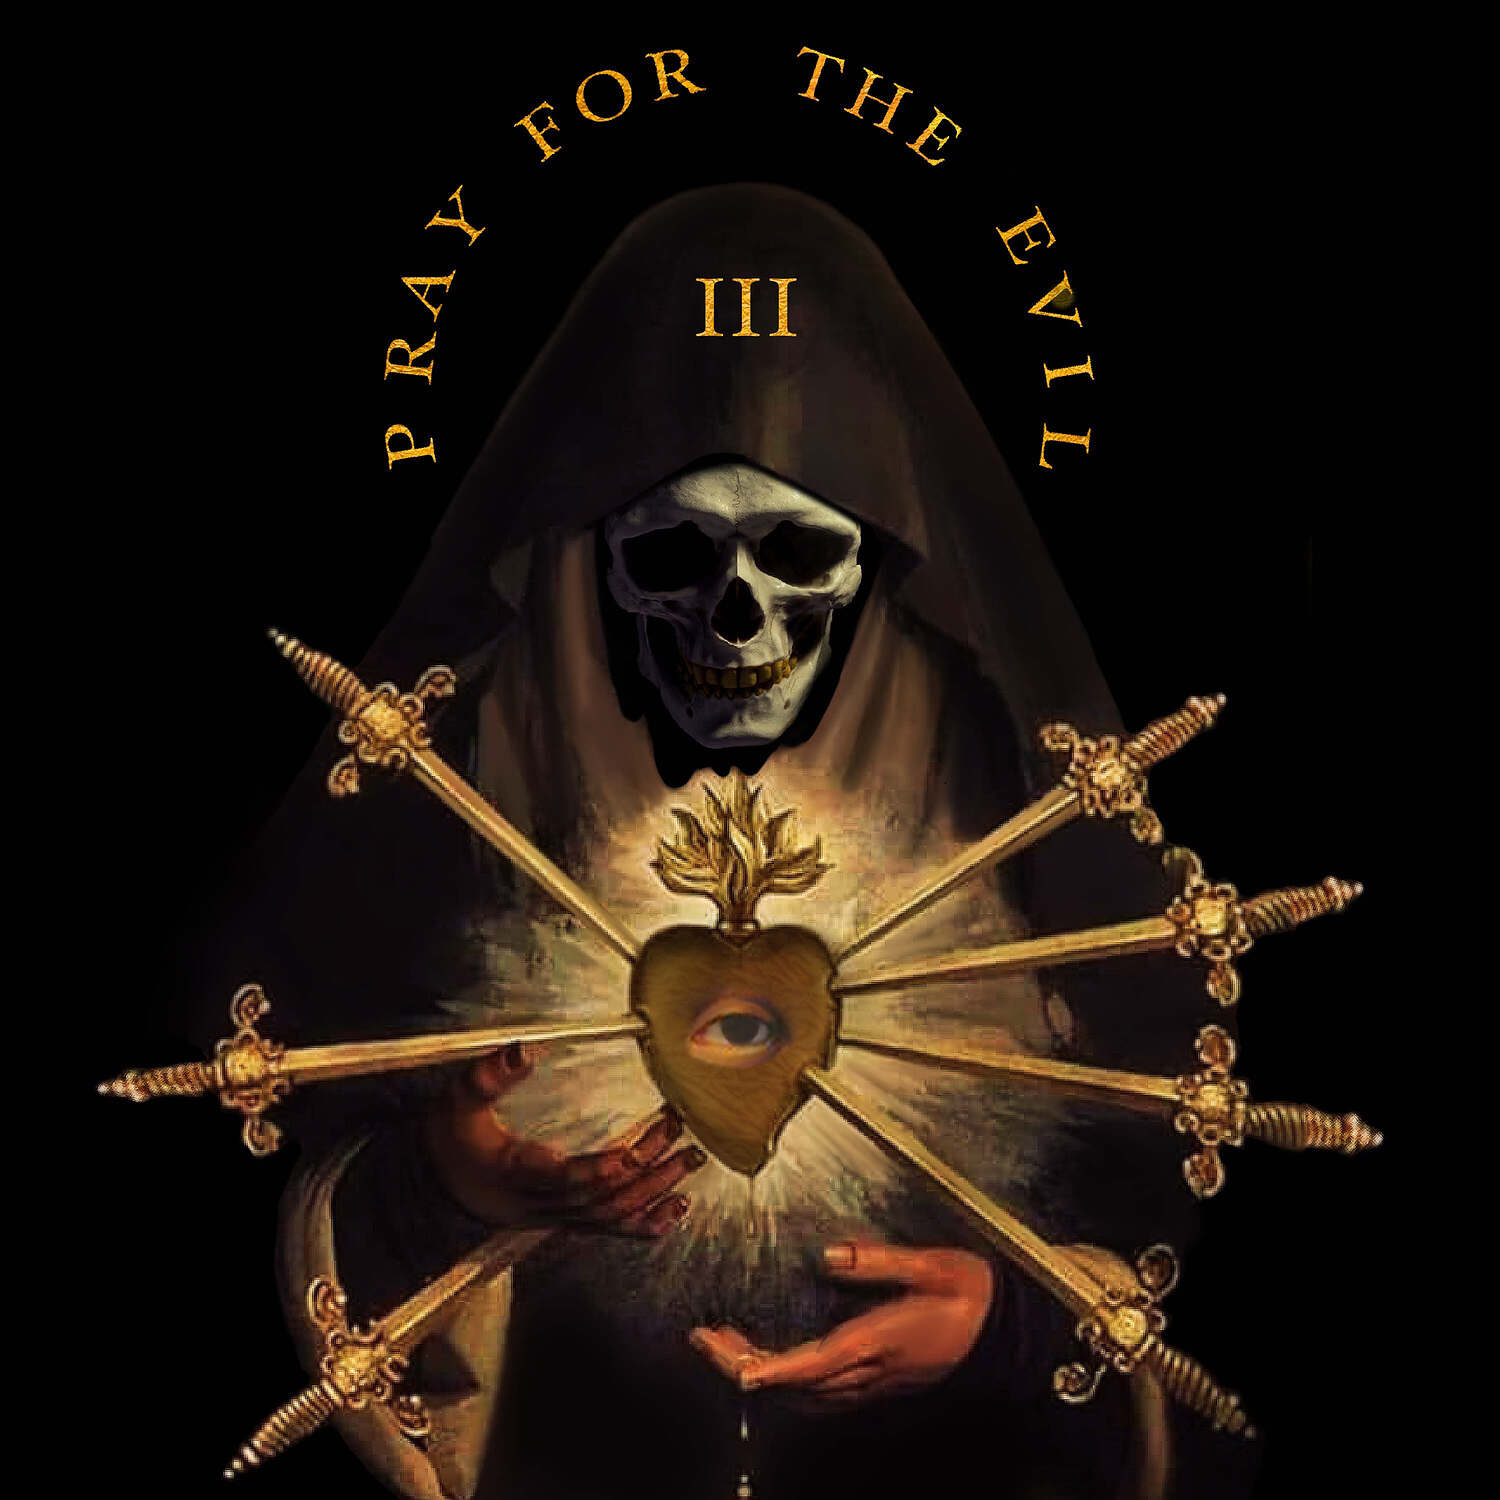 Flee Lord & Mephux Drop ‘Pray For The Evil III’ Album